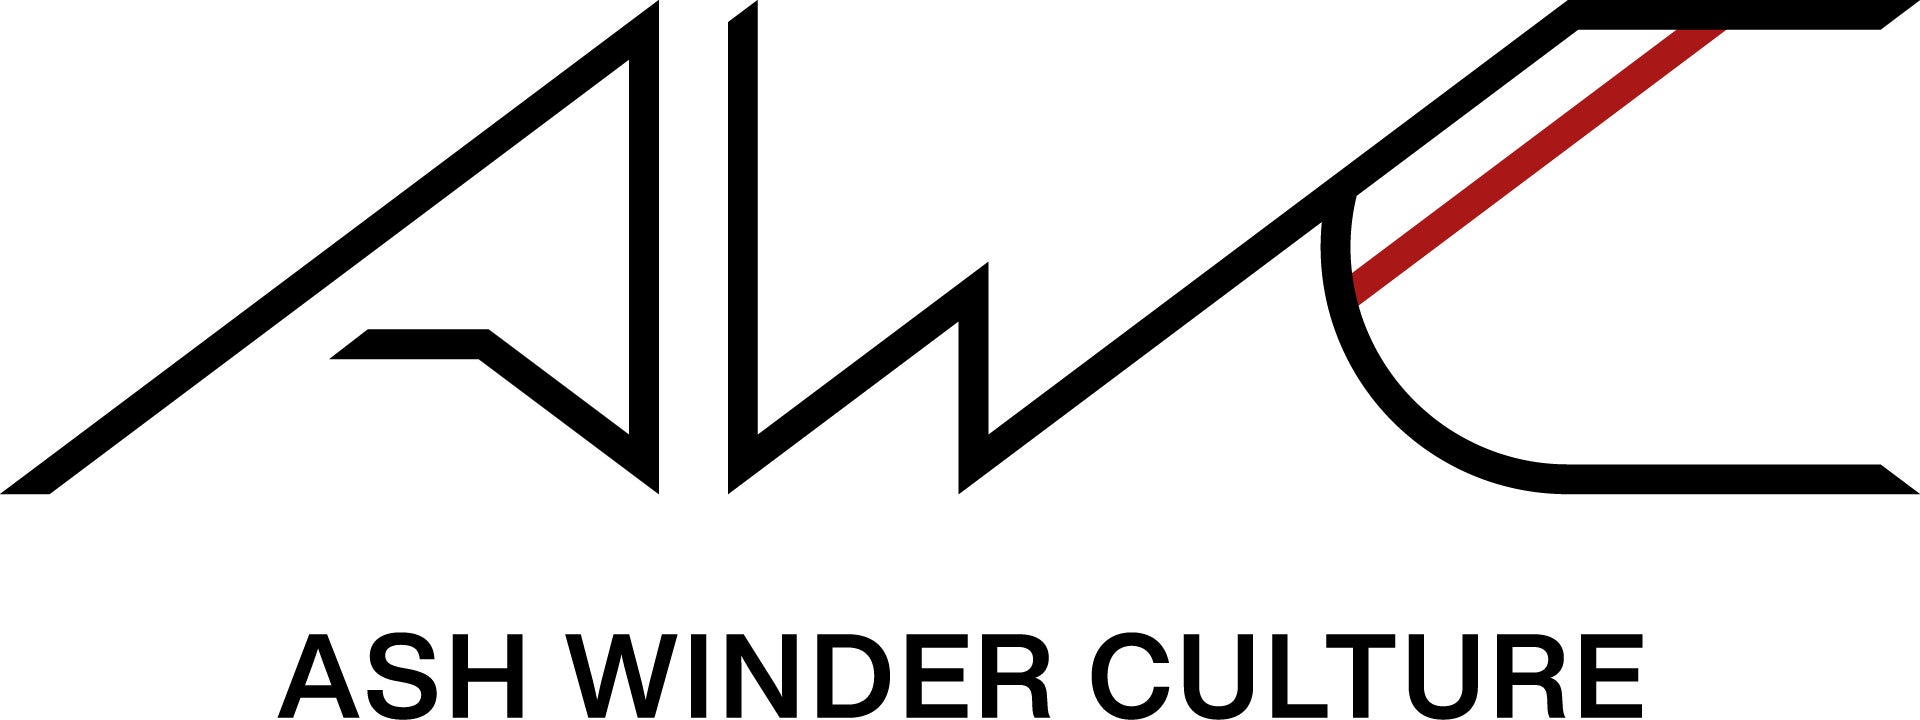 eスポーツキャスター「yue」が株式会社ASH WINDERと所属契約締結、「ASH WINDER CULTURE」に加入のサブ画像3